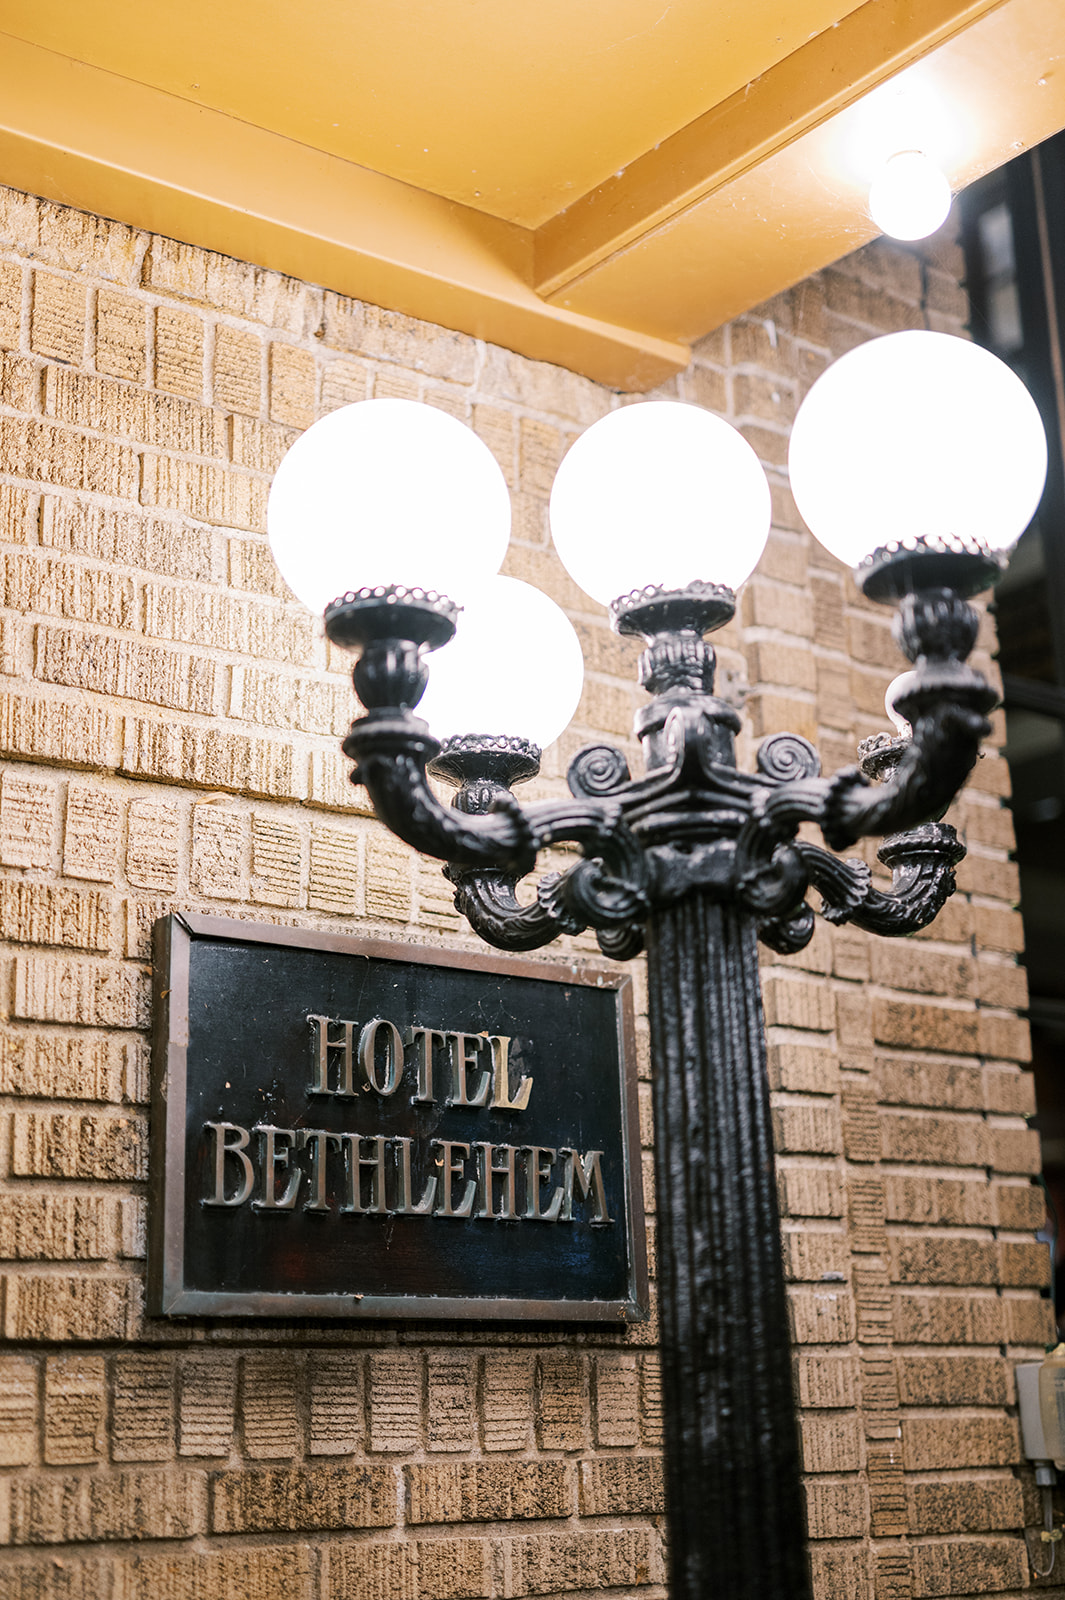 hotel bethlehem sign with lamp